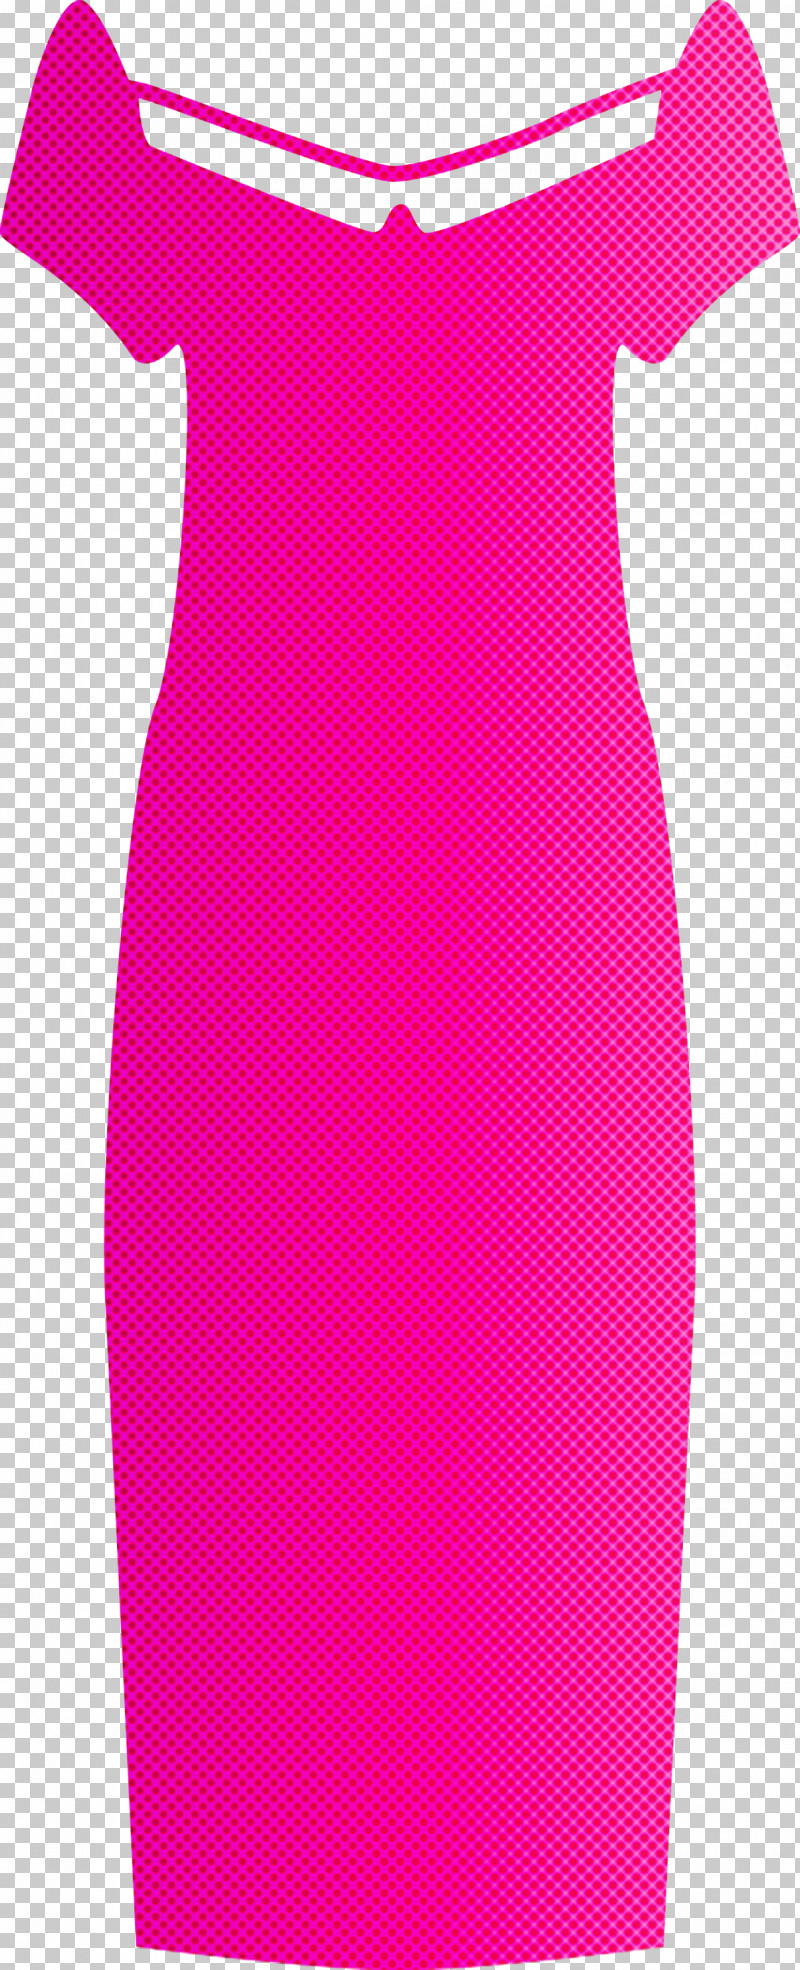 Pink Clothing Pencil Skirt Magenta Dress PNG, Clipart, Clothing, Dress, Magenta, Pencil Skirt, Pink Free PNG Download